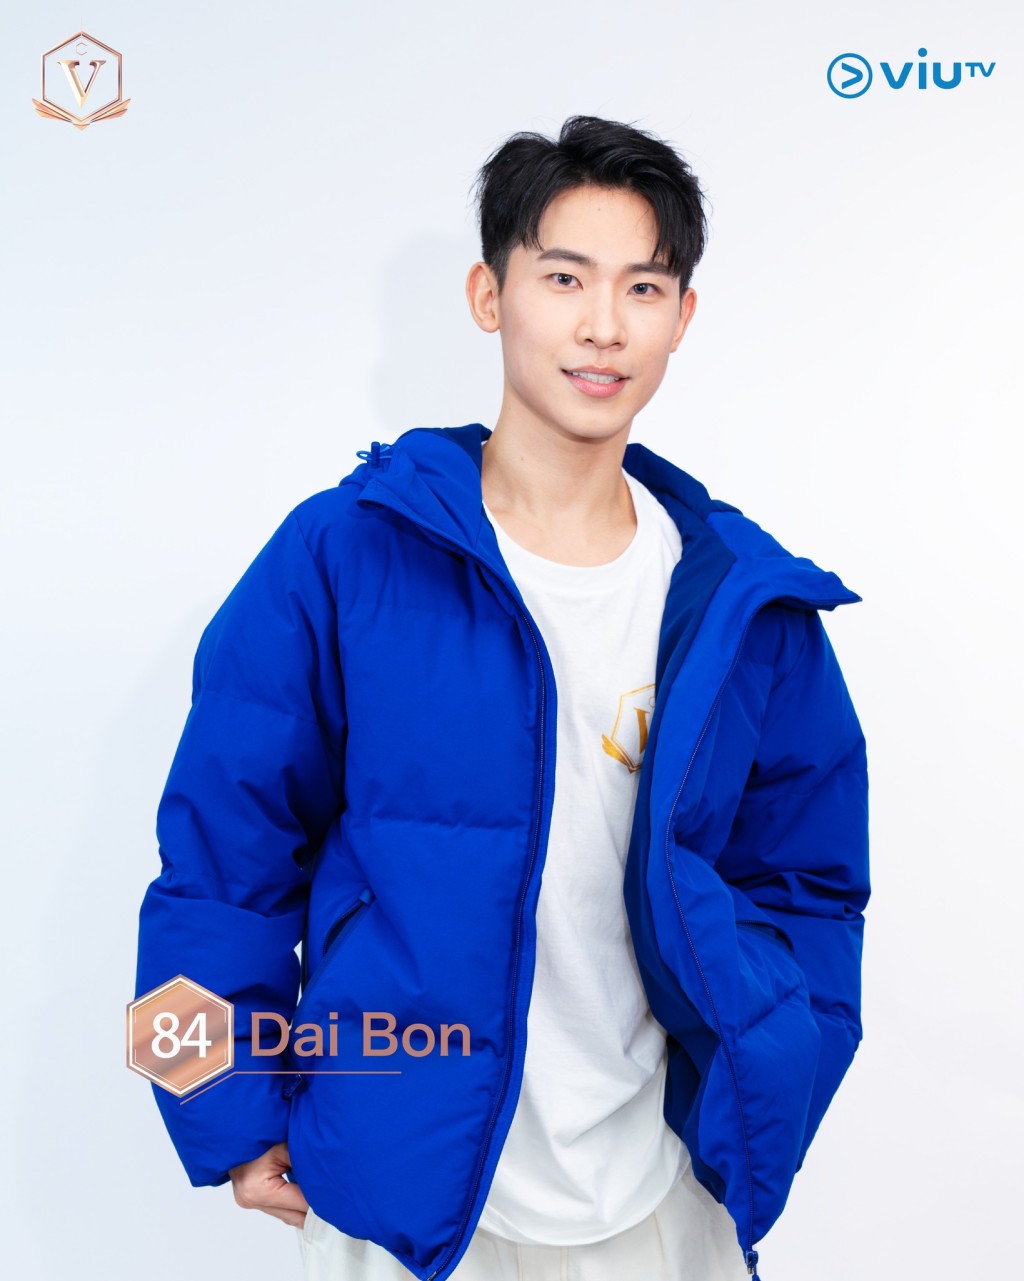 成邦（Dai Bon） 年齡： 28 職業： 舞蹈員 擅長： 唱歌、跳舞、演戲 IG：andrew_daibon